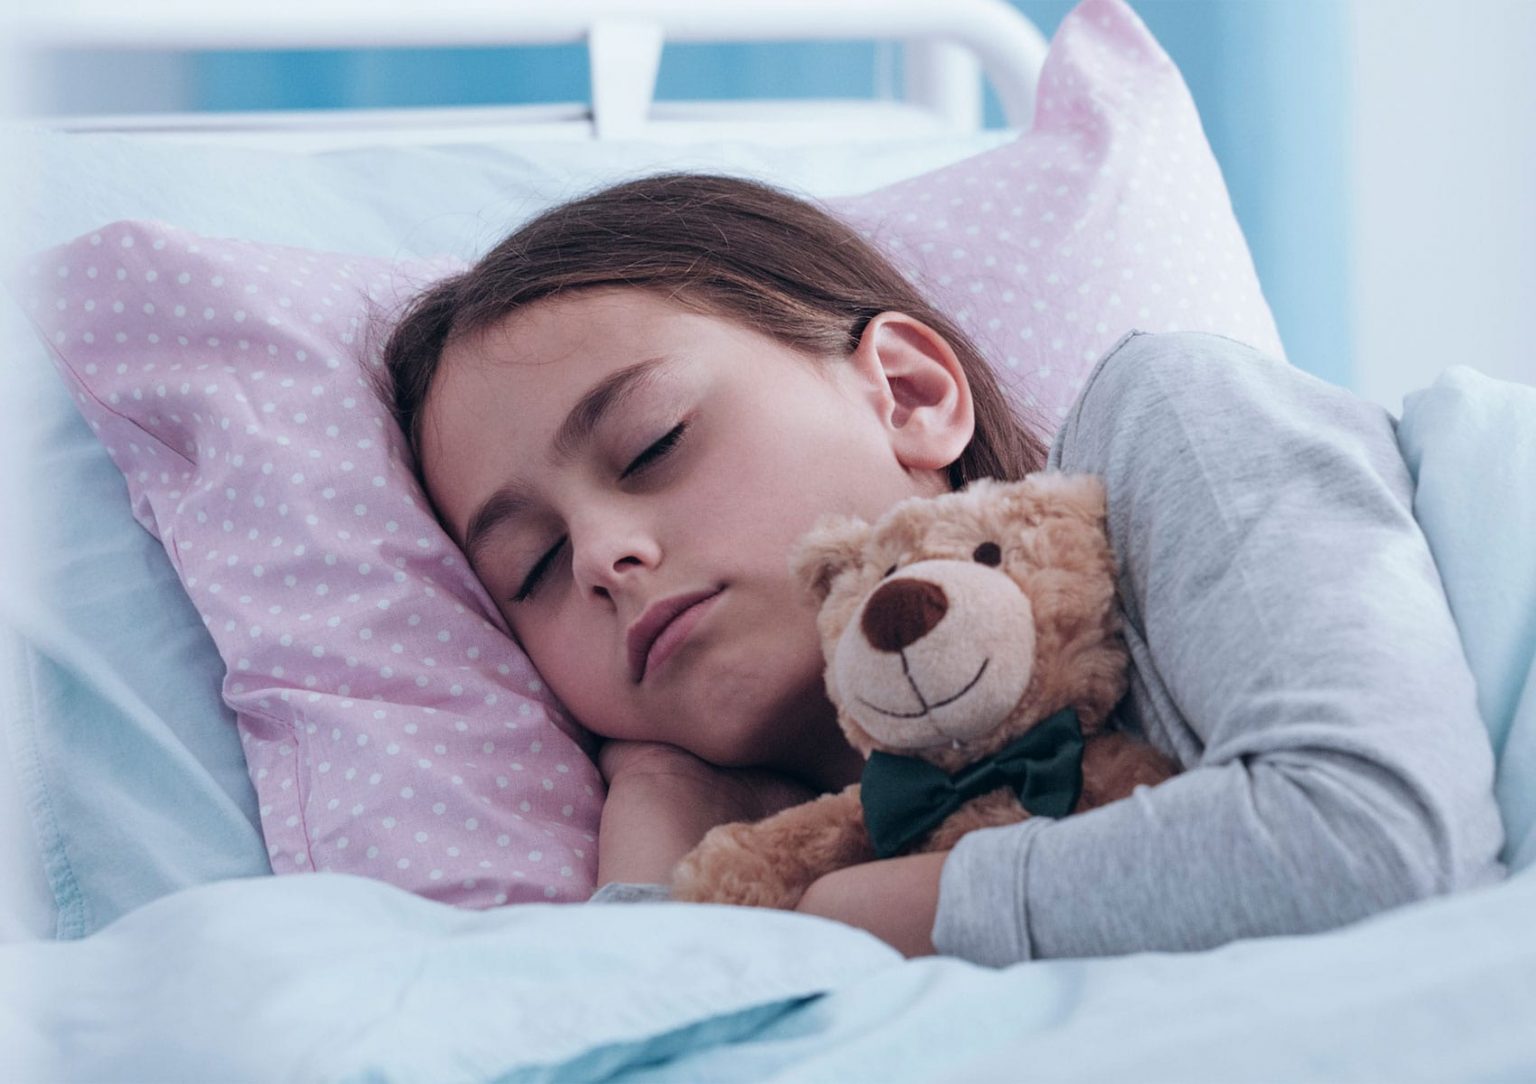 Pediatric Sleep Program The Center for Sleep Medicine